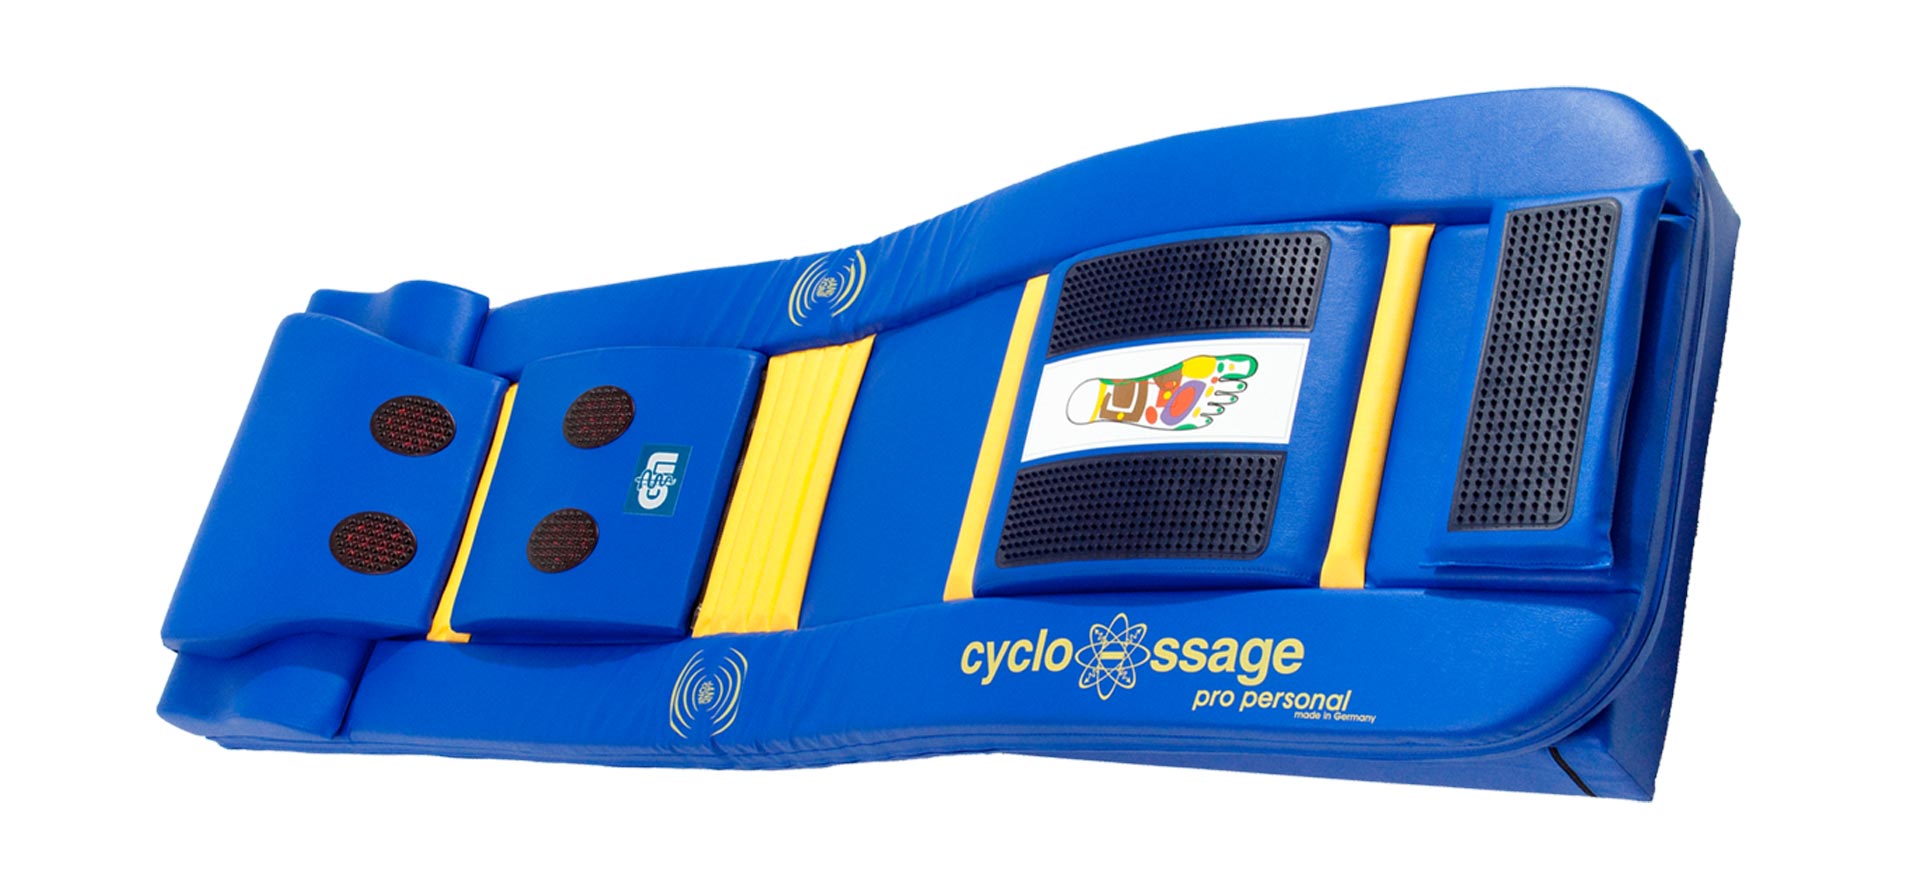 Cyclo-ssage